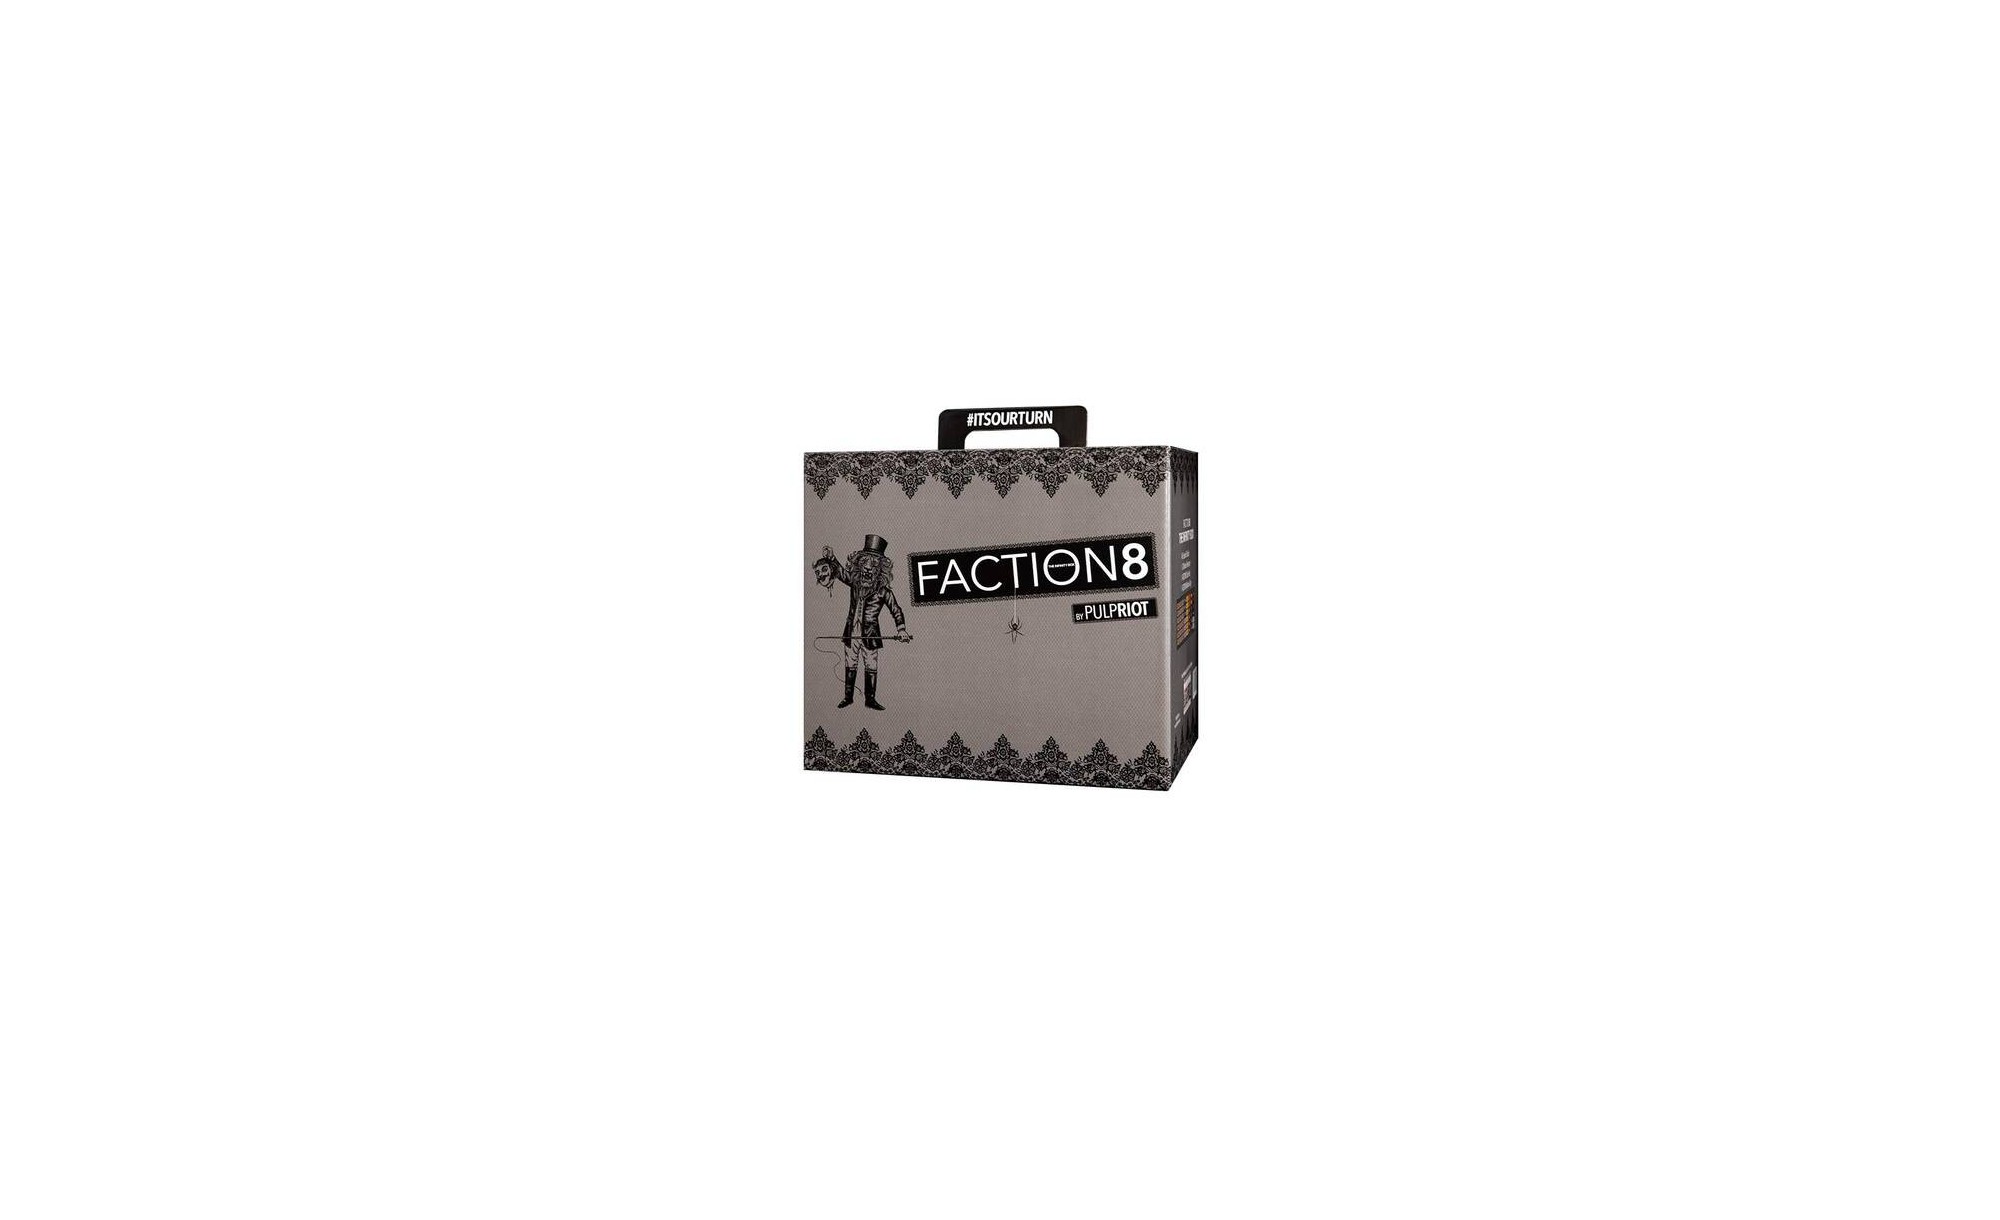 FACTION8 PERMANENT HAIRCOLOR INFINITY BOX